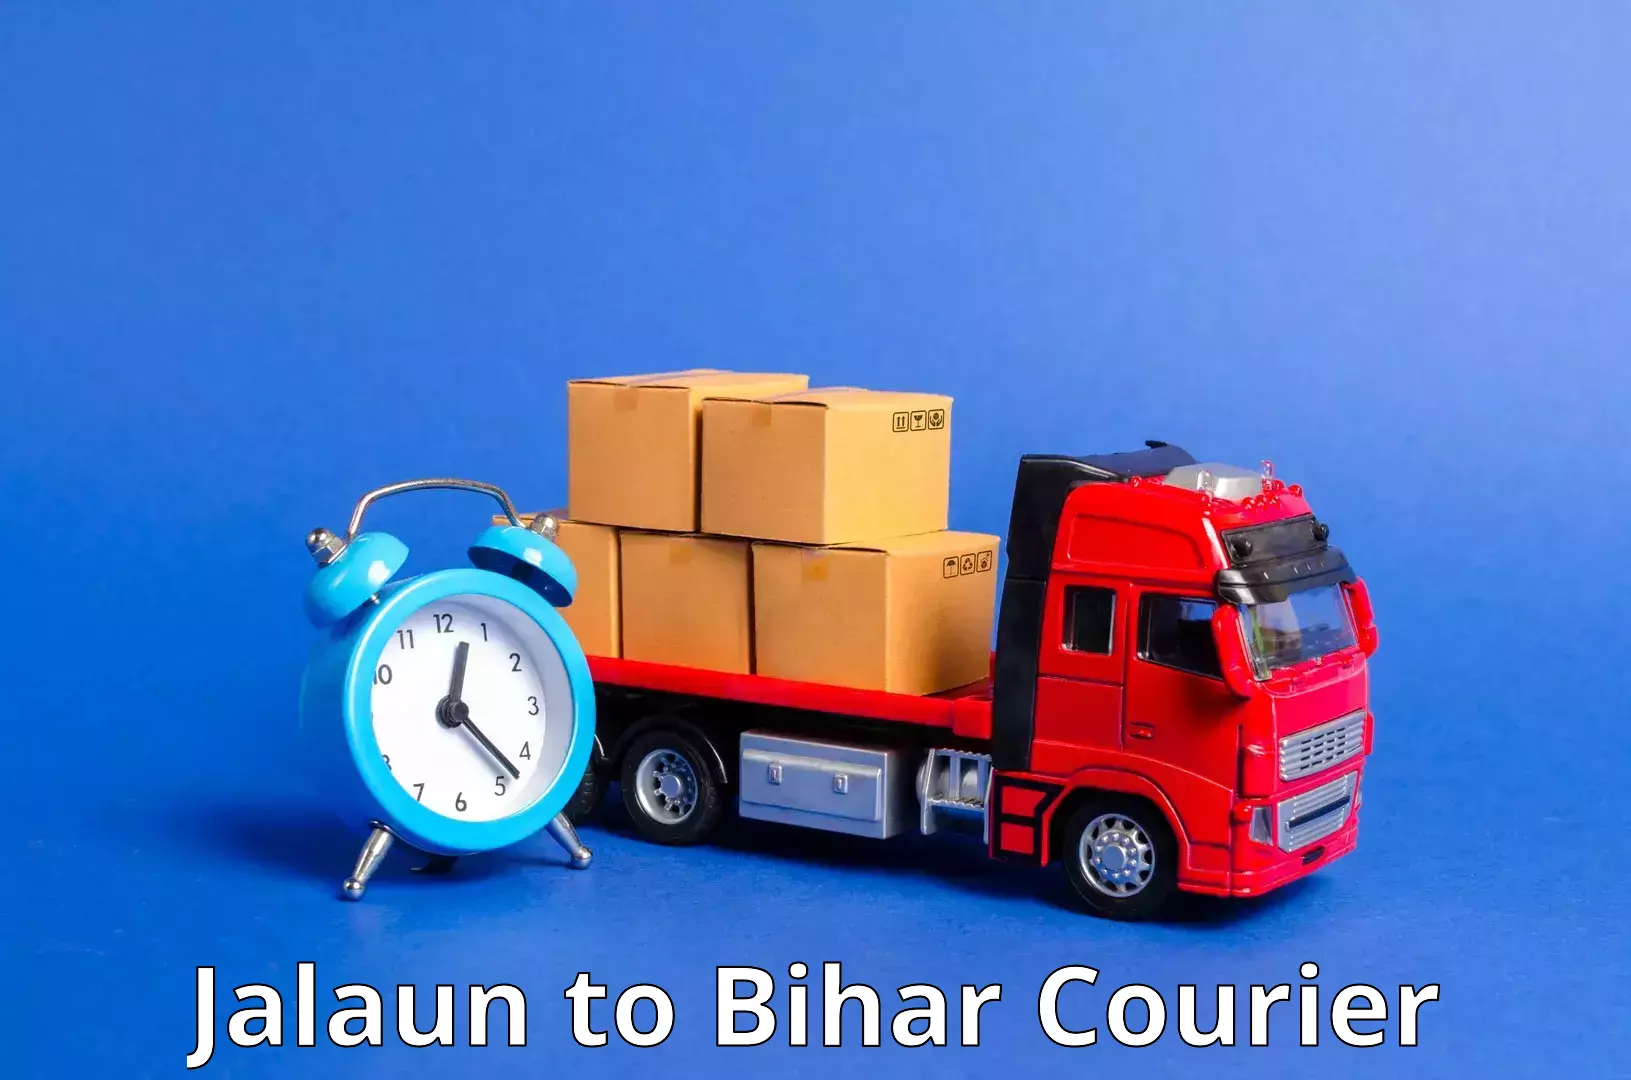 Next-day delivery options Jalaun to Valmiki Nagar